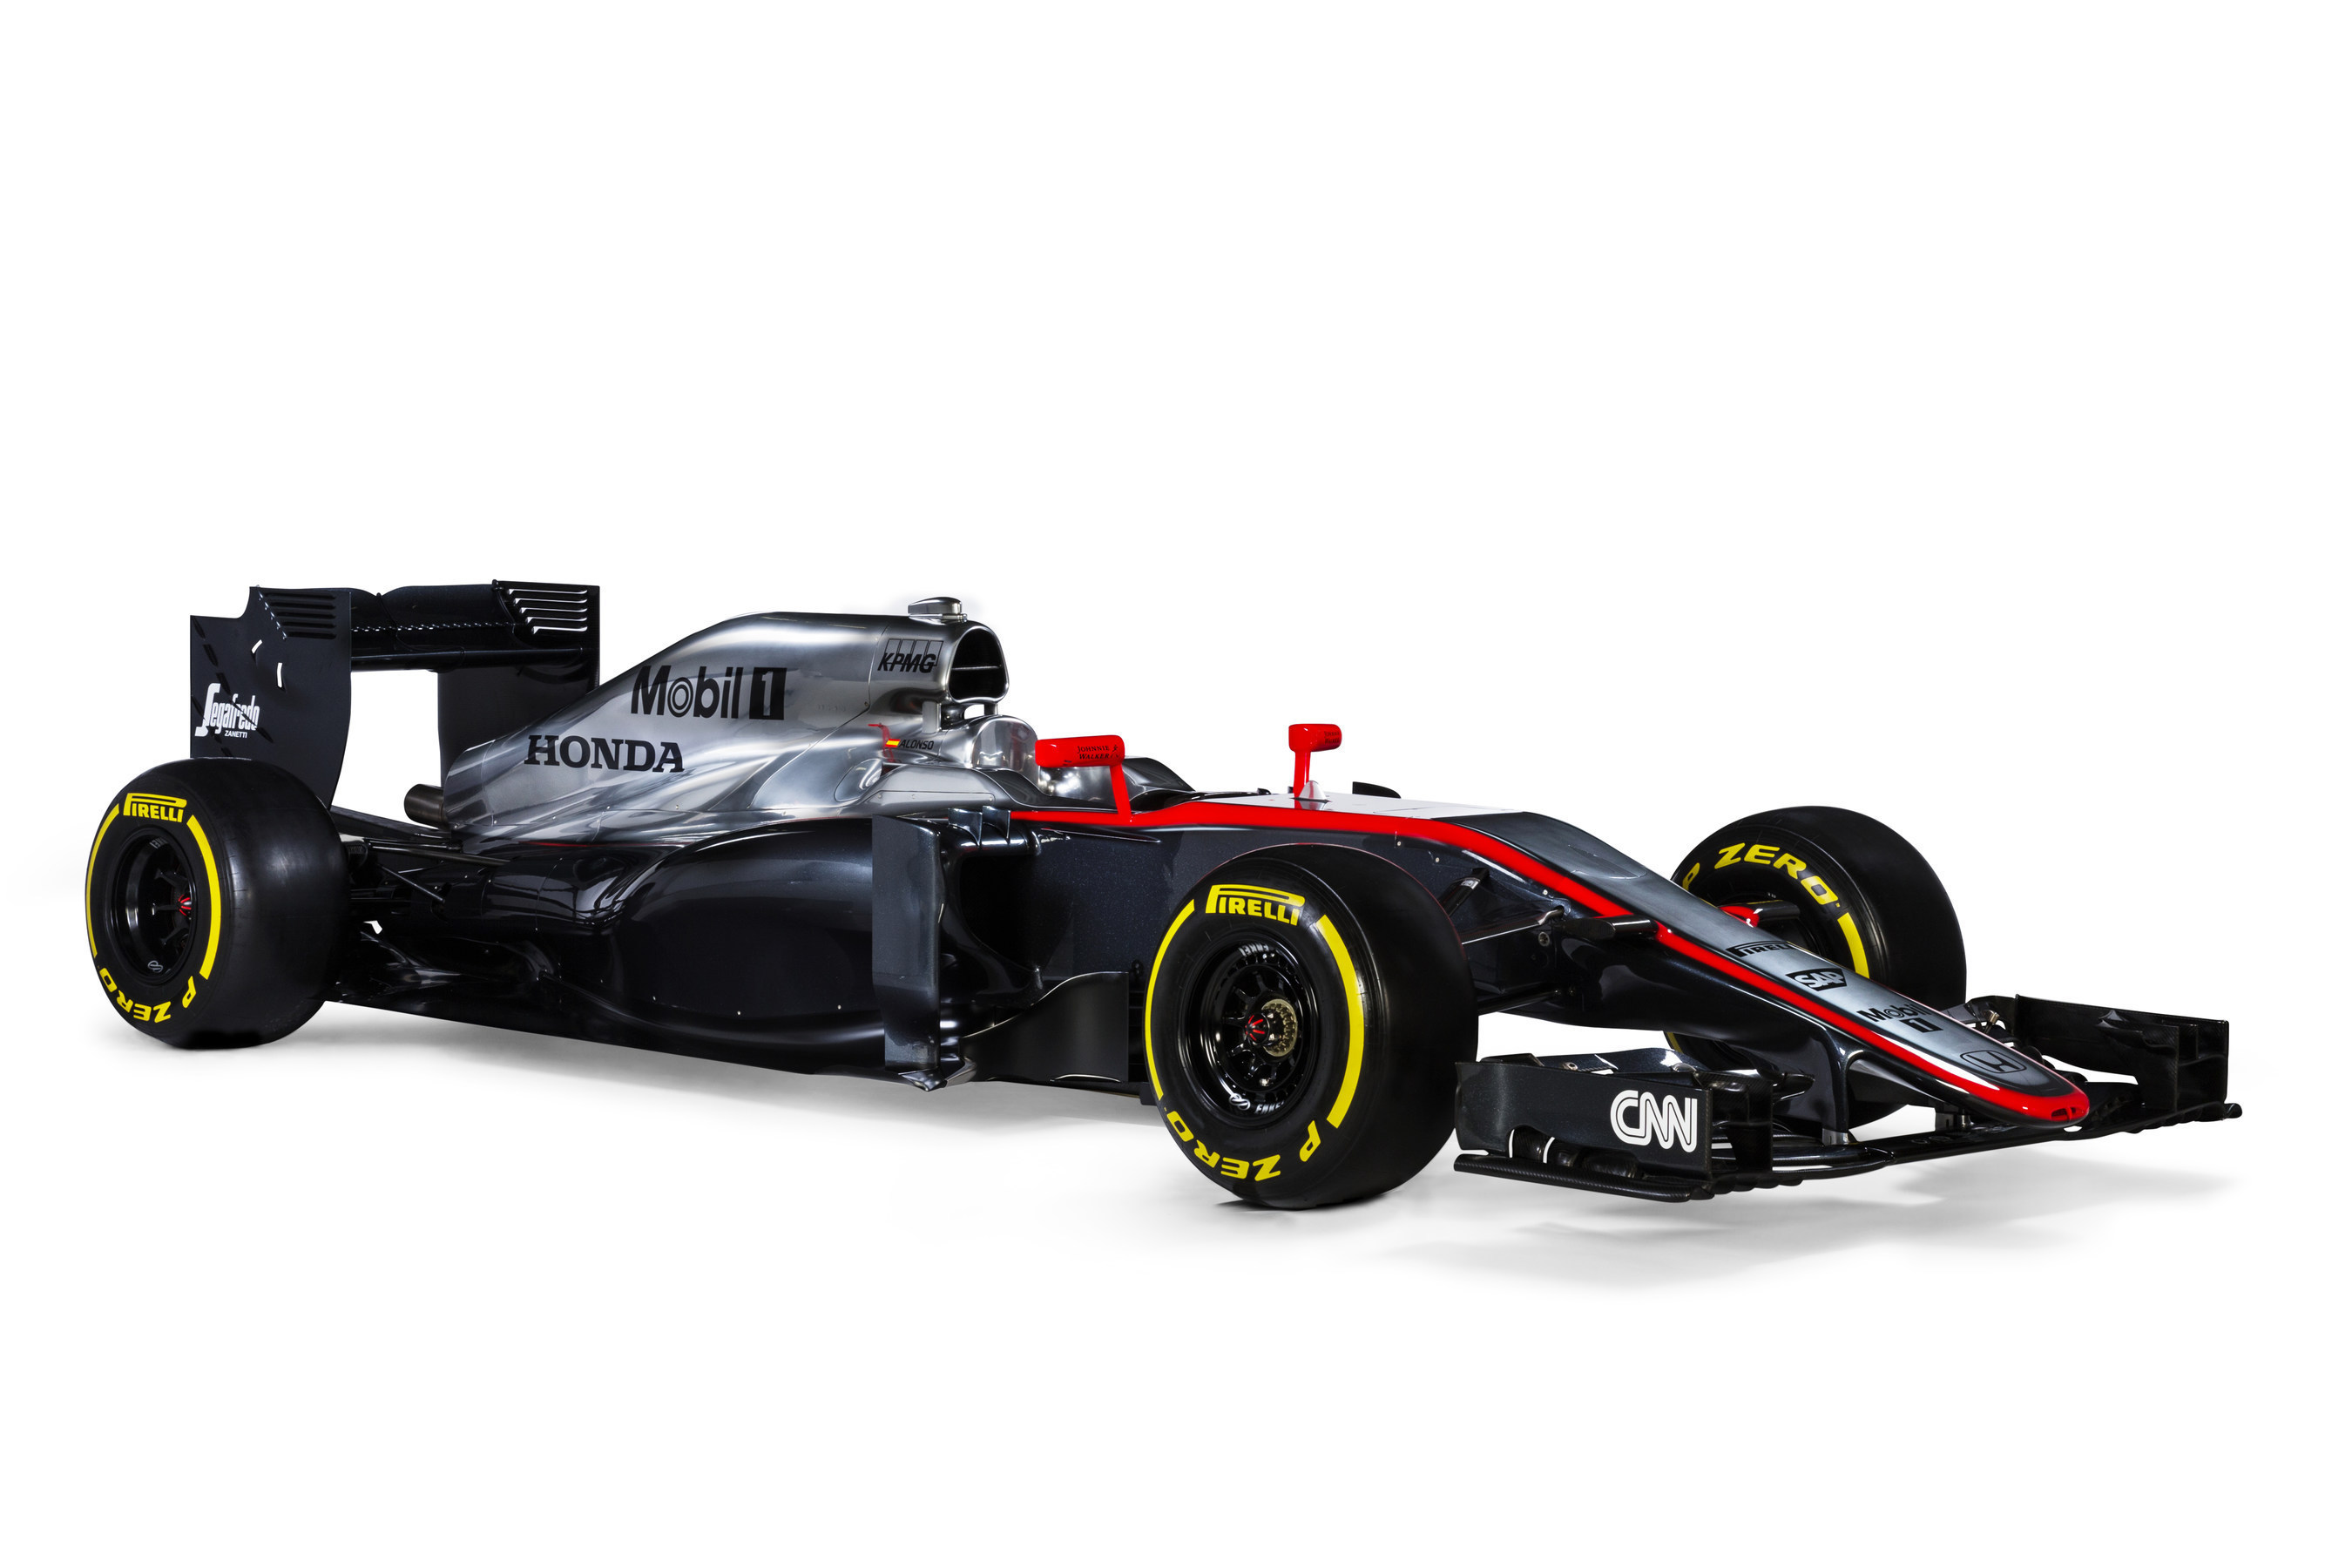 McLaren-Honda Reveals the New MP4-30